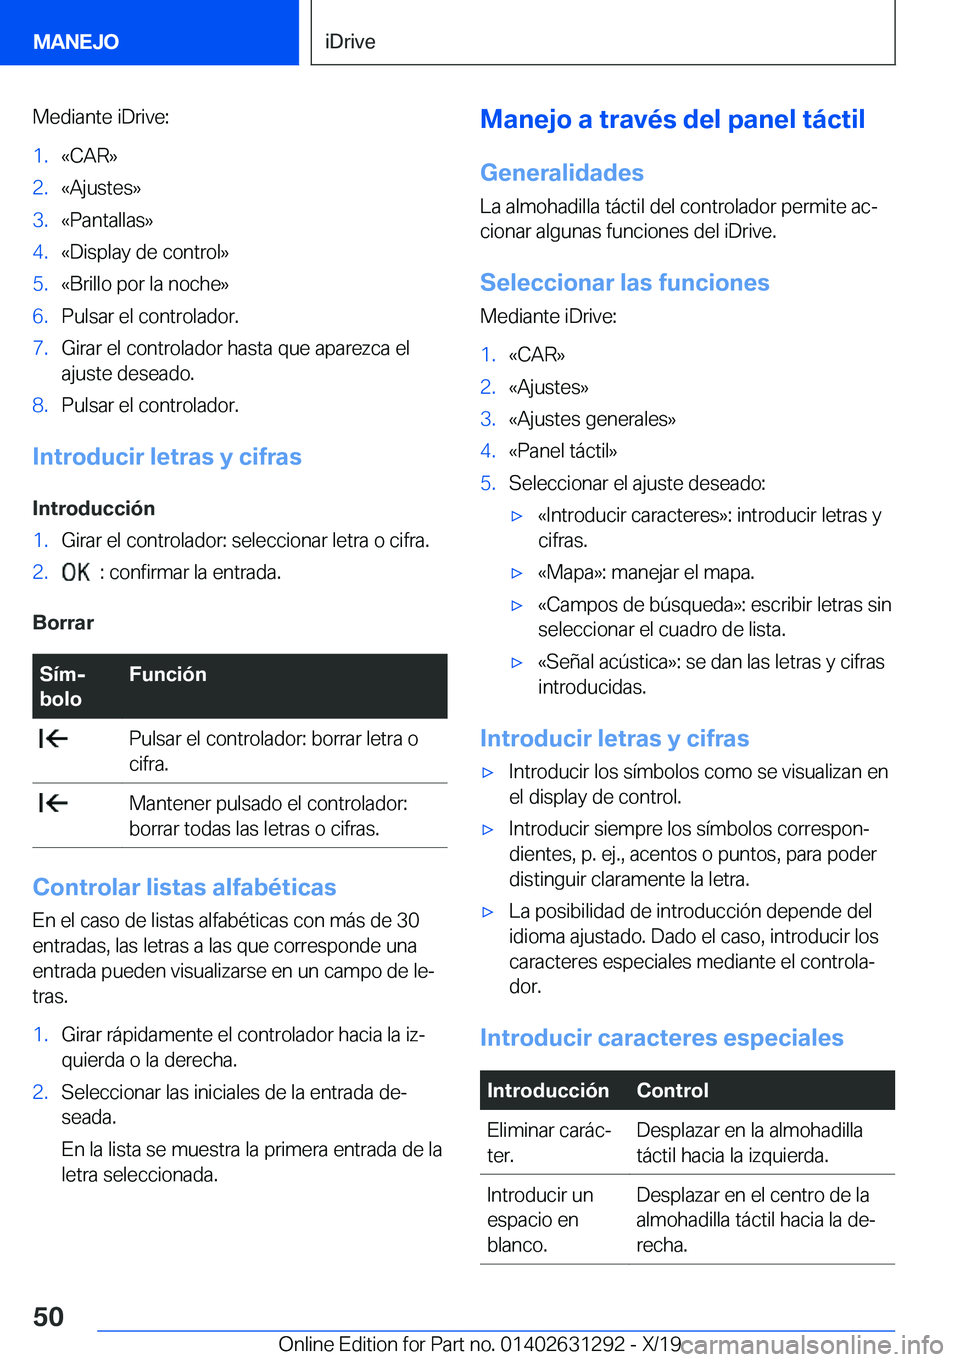 BMW M8 2020  Manuales de Empleo (in Spanish) �M�e�d�i�a�n�t�e��i�D�r�i�v�e�:�1�.�«�C�A�R�{�2�.�«�A�j�u�s�t�e�s�{�3�.�«�P�a�n�t�a�l�l�a�s�{�4�.�«�D�i�s�p�l�a�y��d�e��c�o�n�t�r�o�l�{�5�.�«�B�r�i�l�l�o��p�o�r��l�a��n�o�c�h�e�{�6�.�P�u�l�